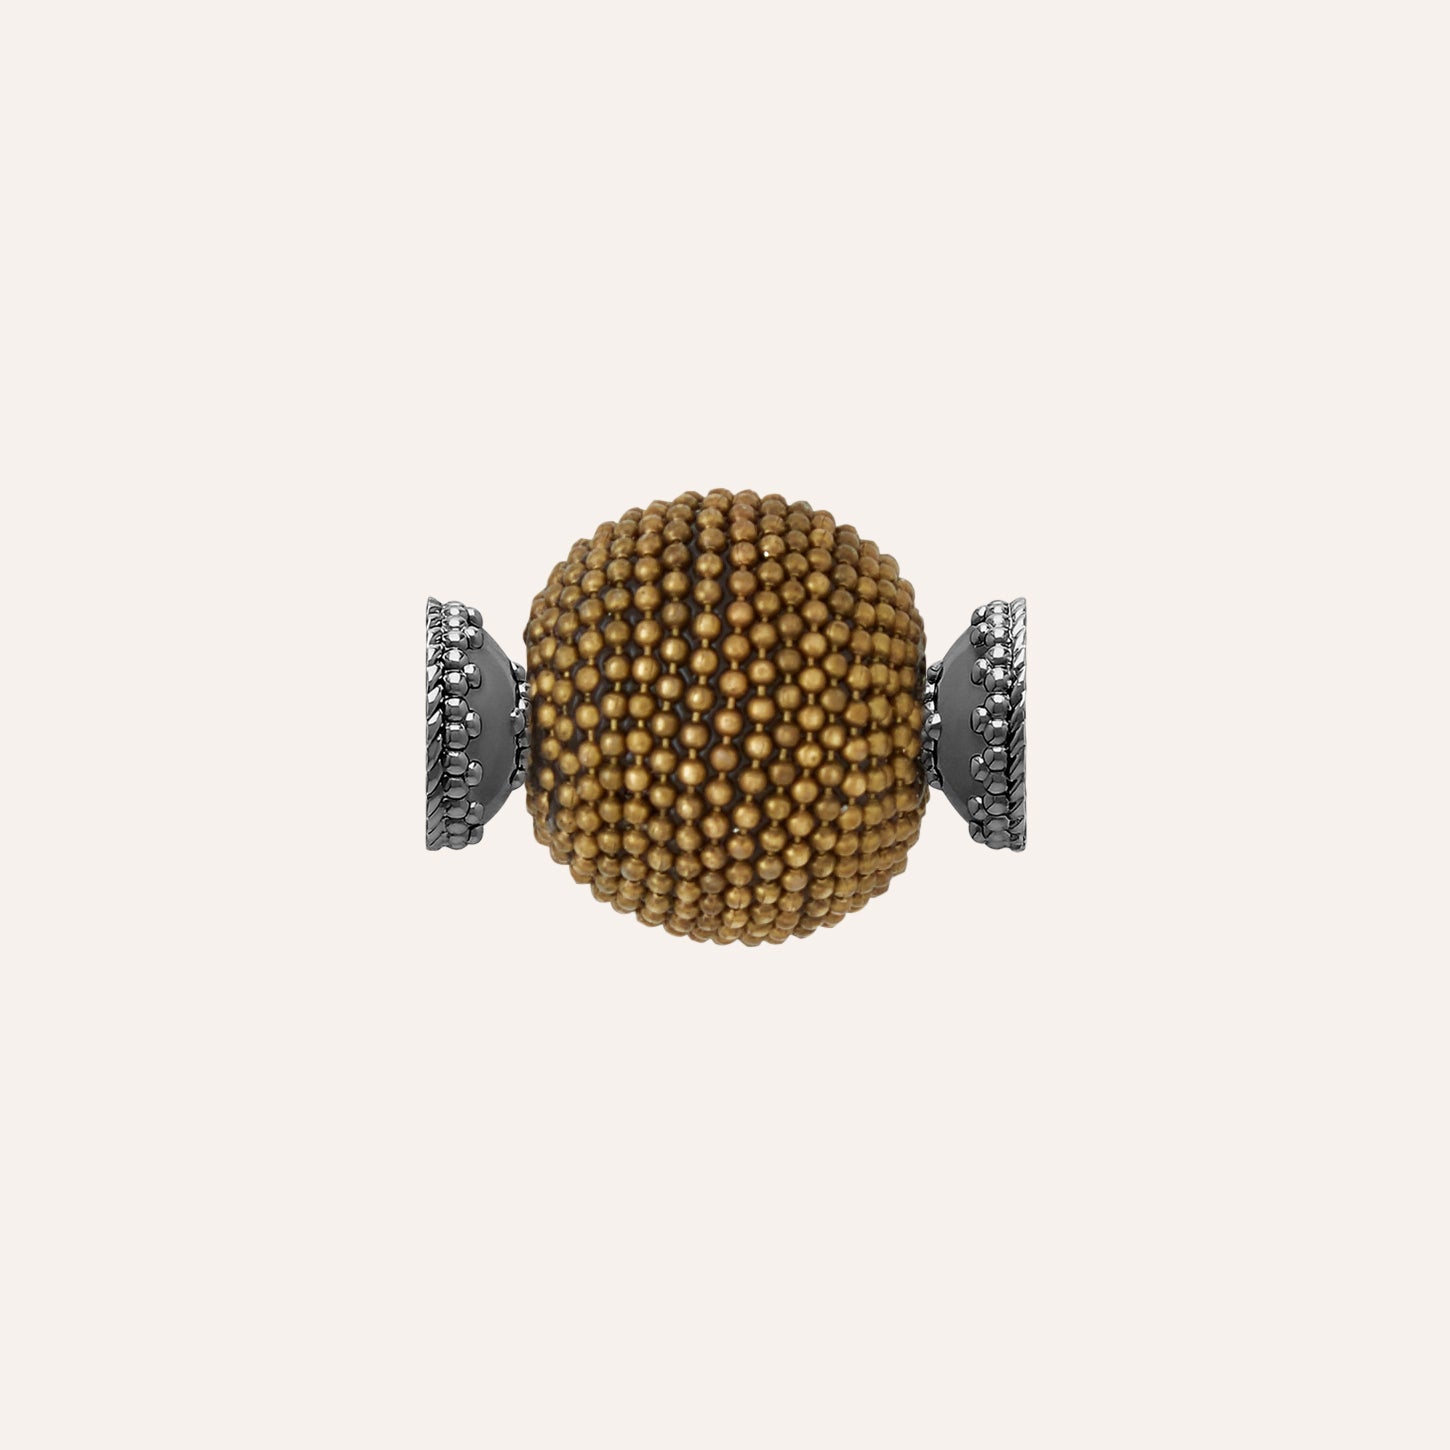 Caviar Bronze Bead 25mm Gunmetal Centerpiece